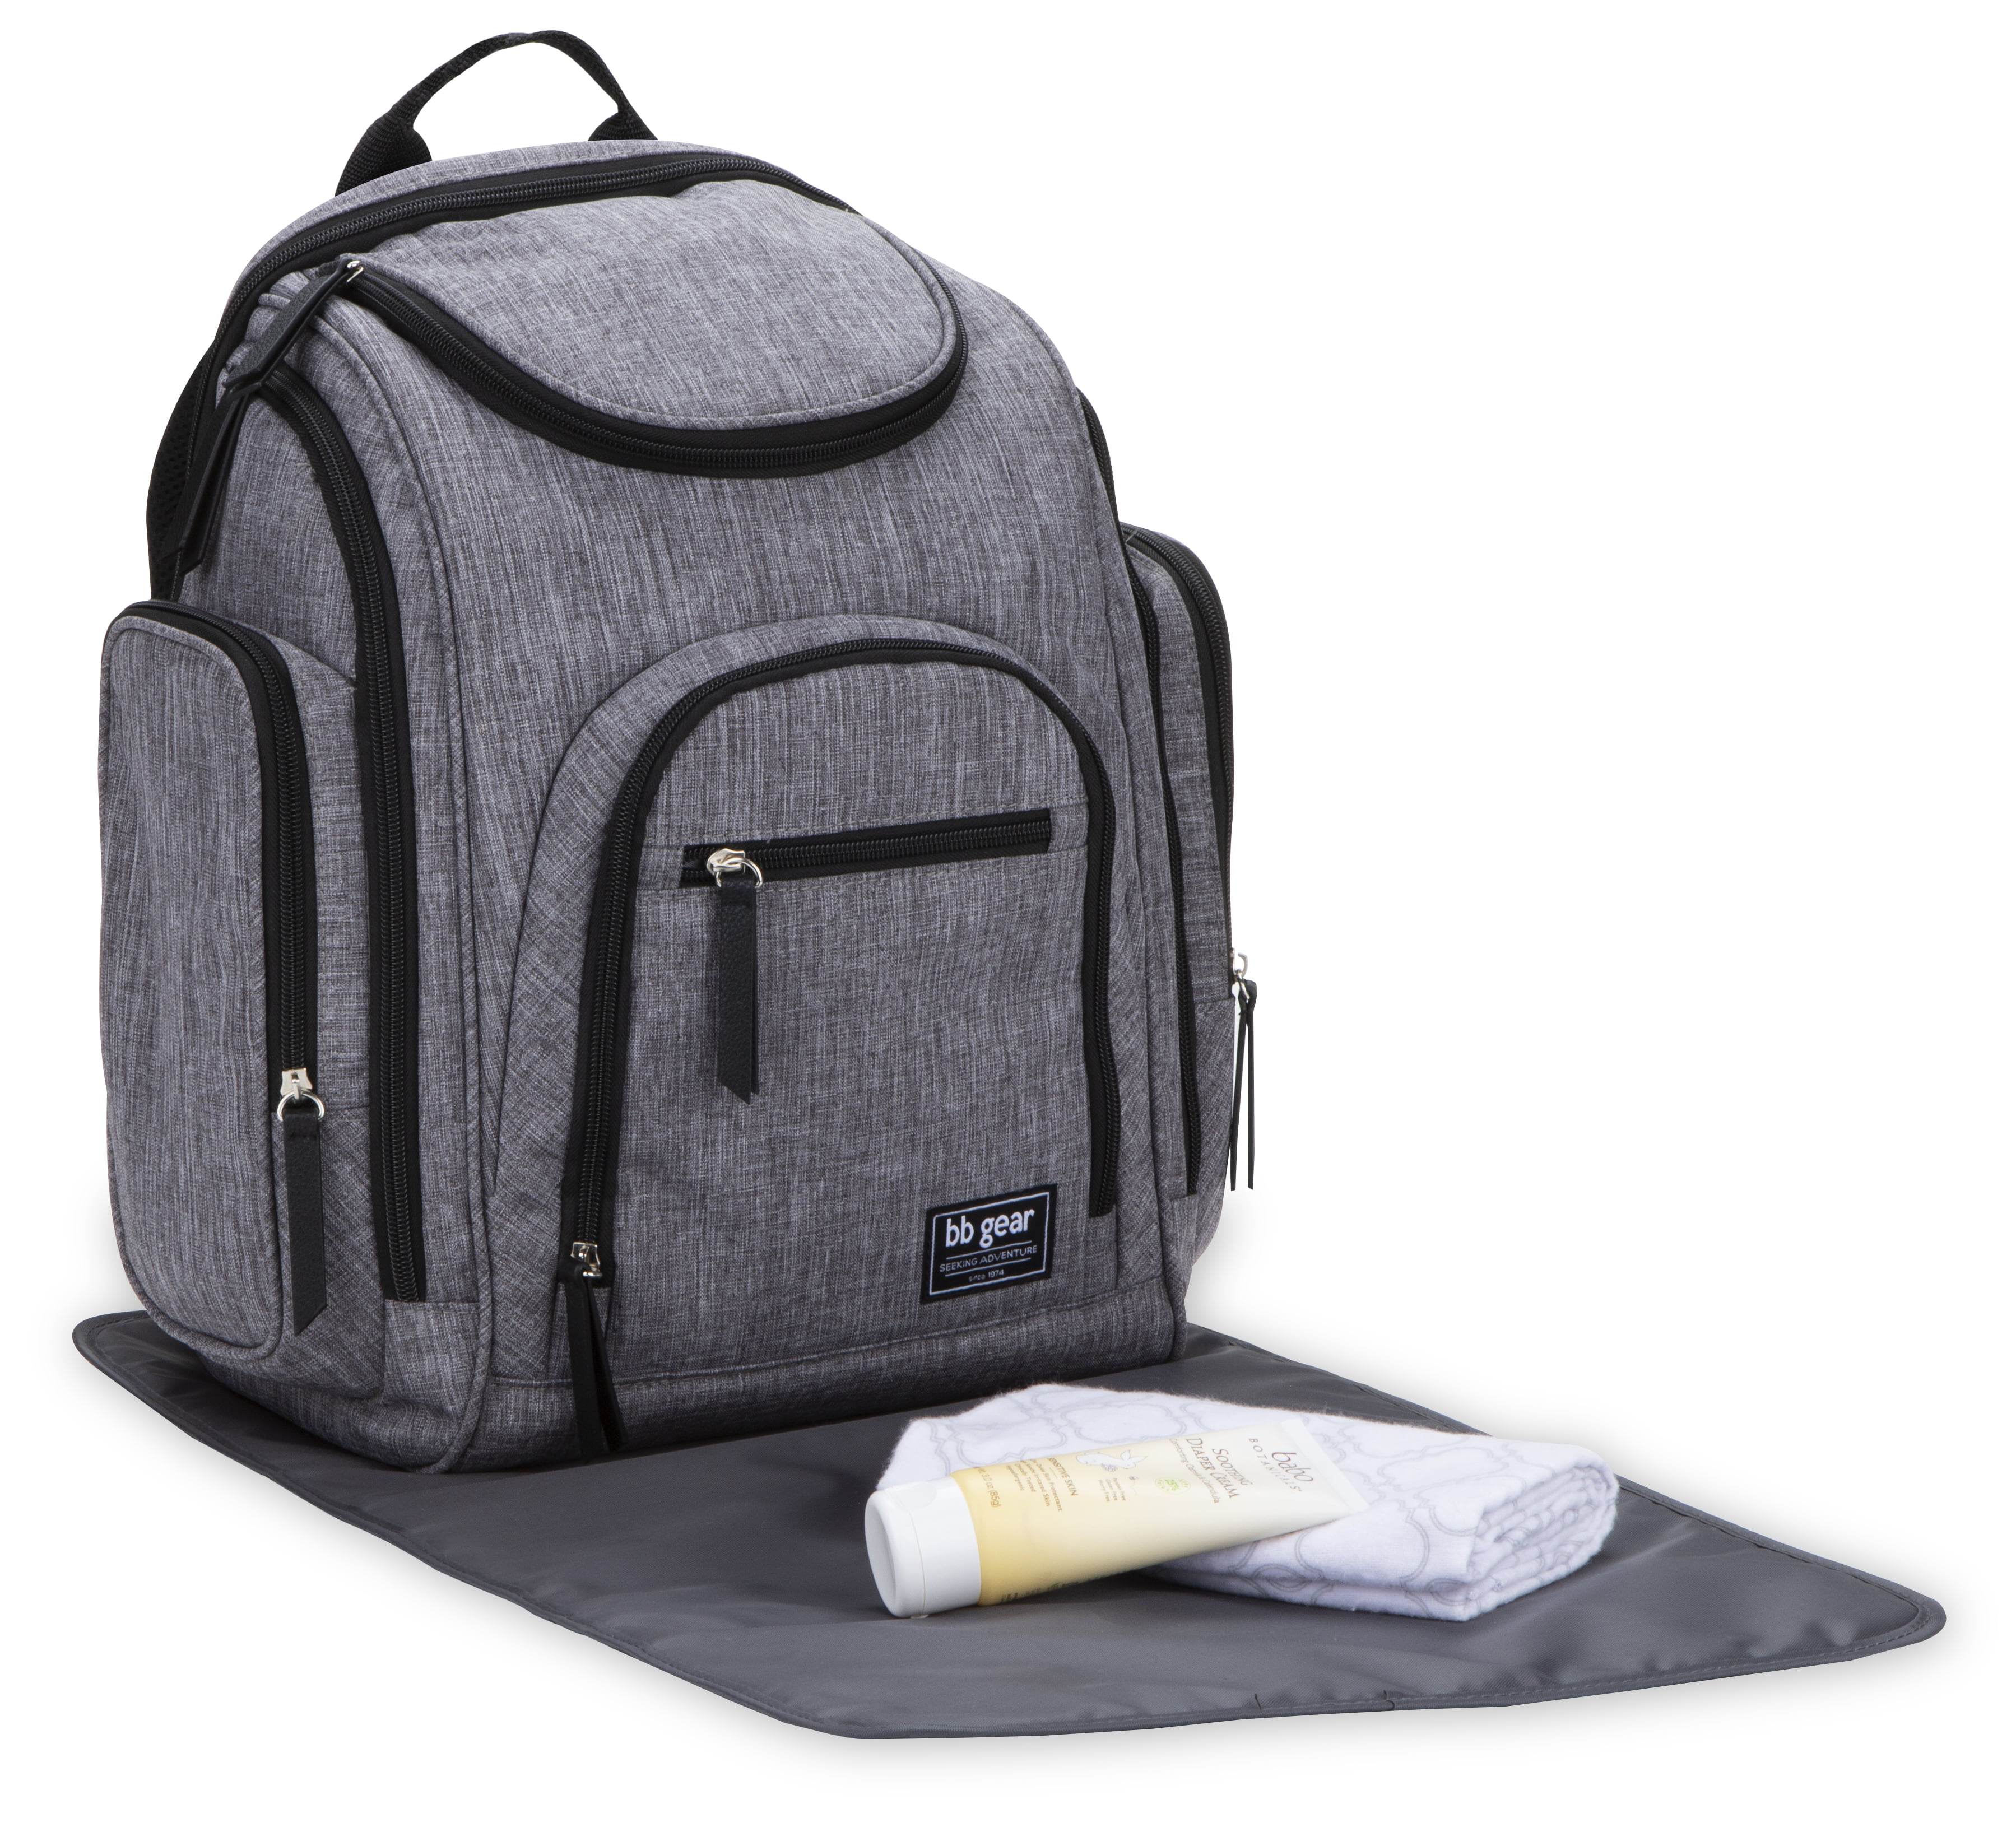 bb gear, Accessories, Bb Gear Backpack Diaper Bag